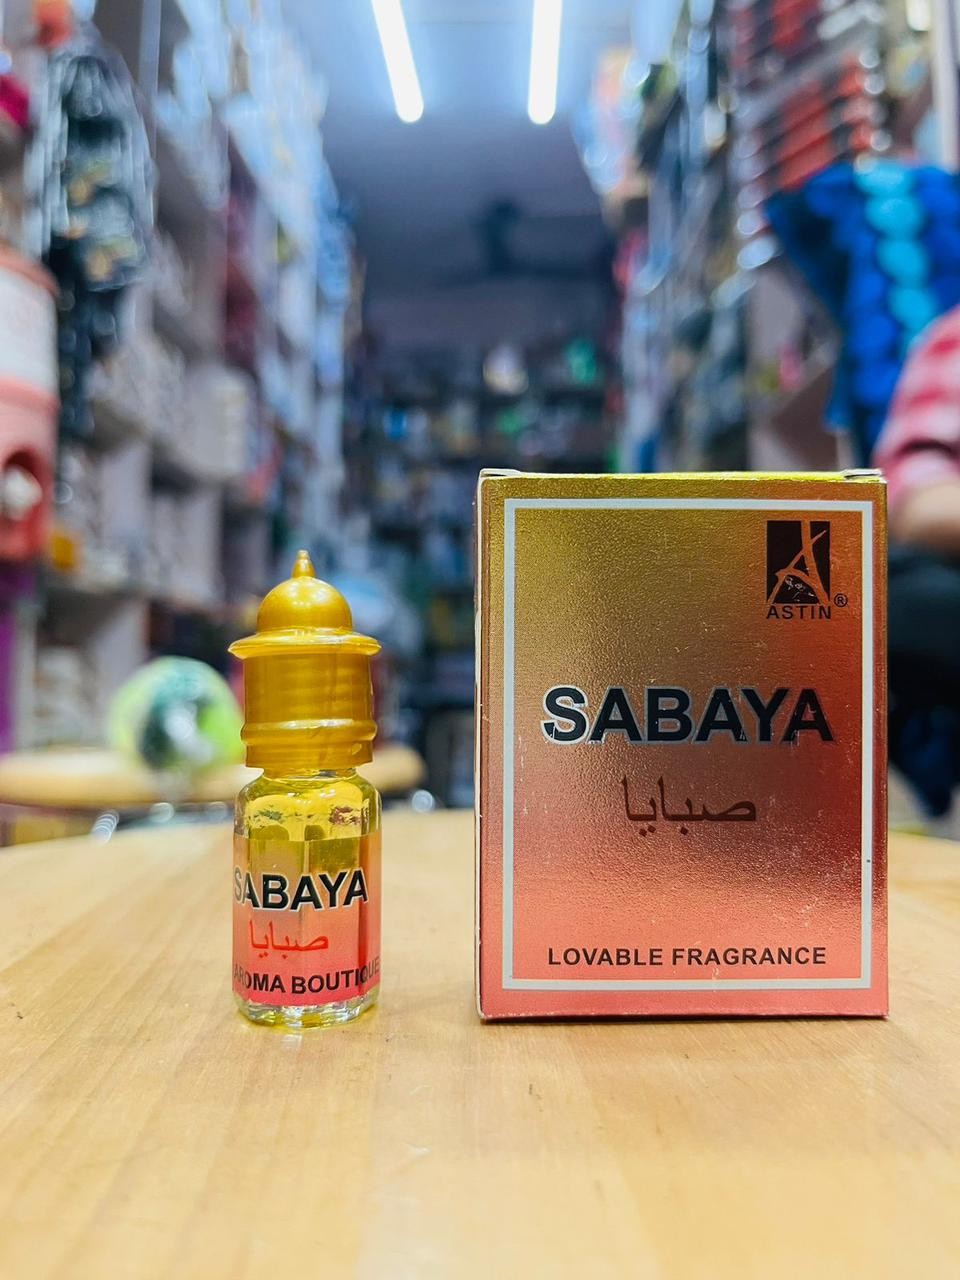 Sabaya lovable fragrance perfume free -alcohol form attar